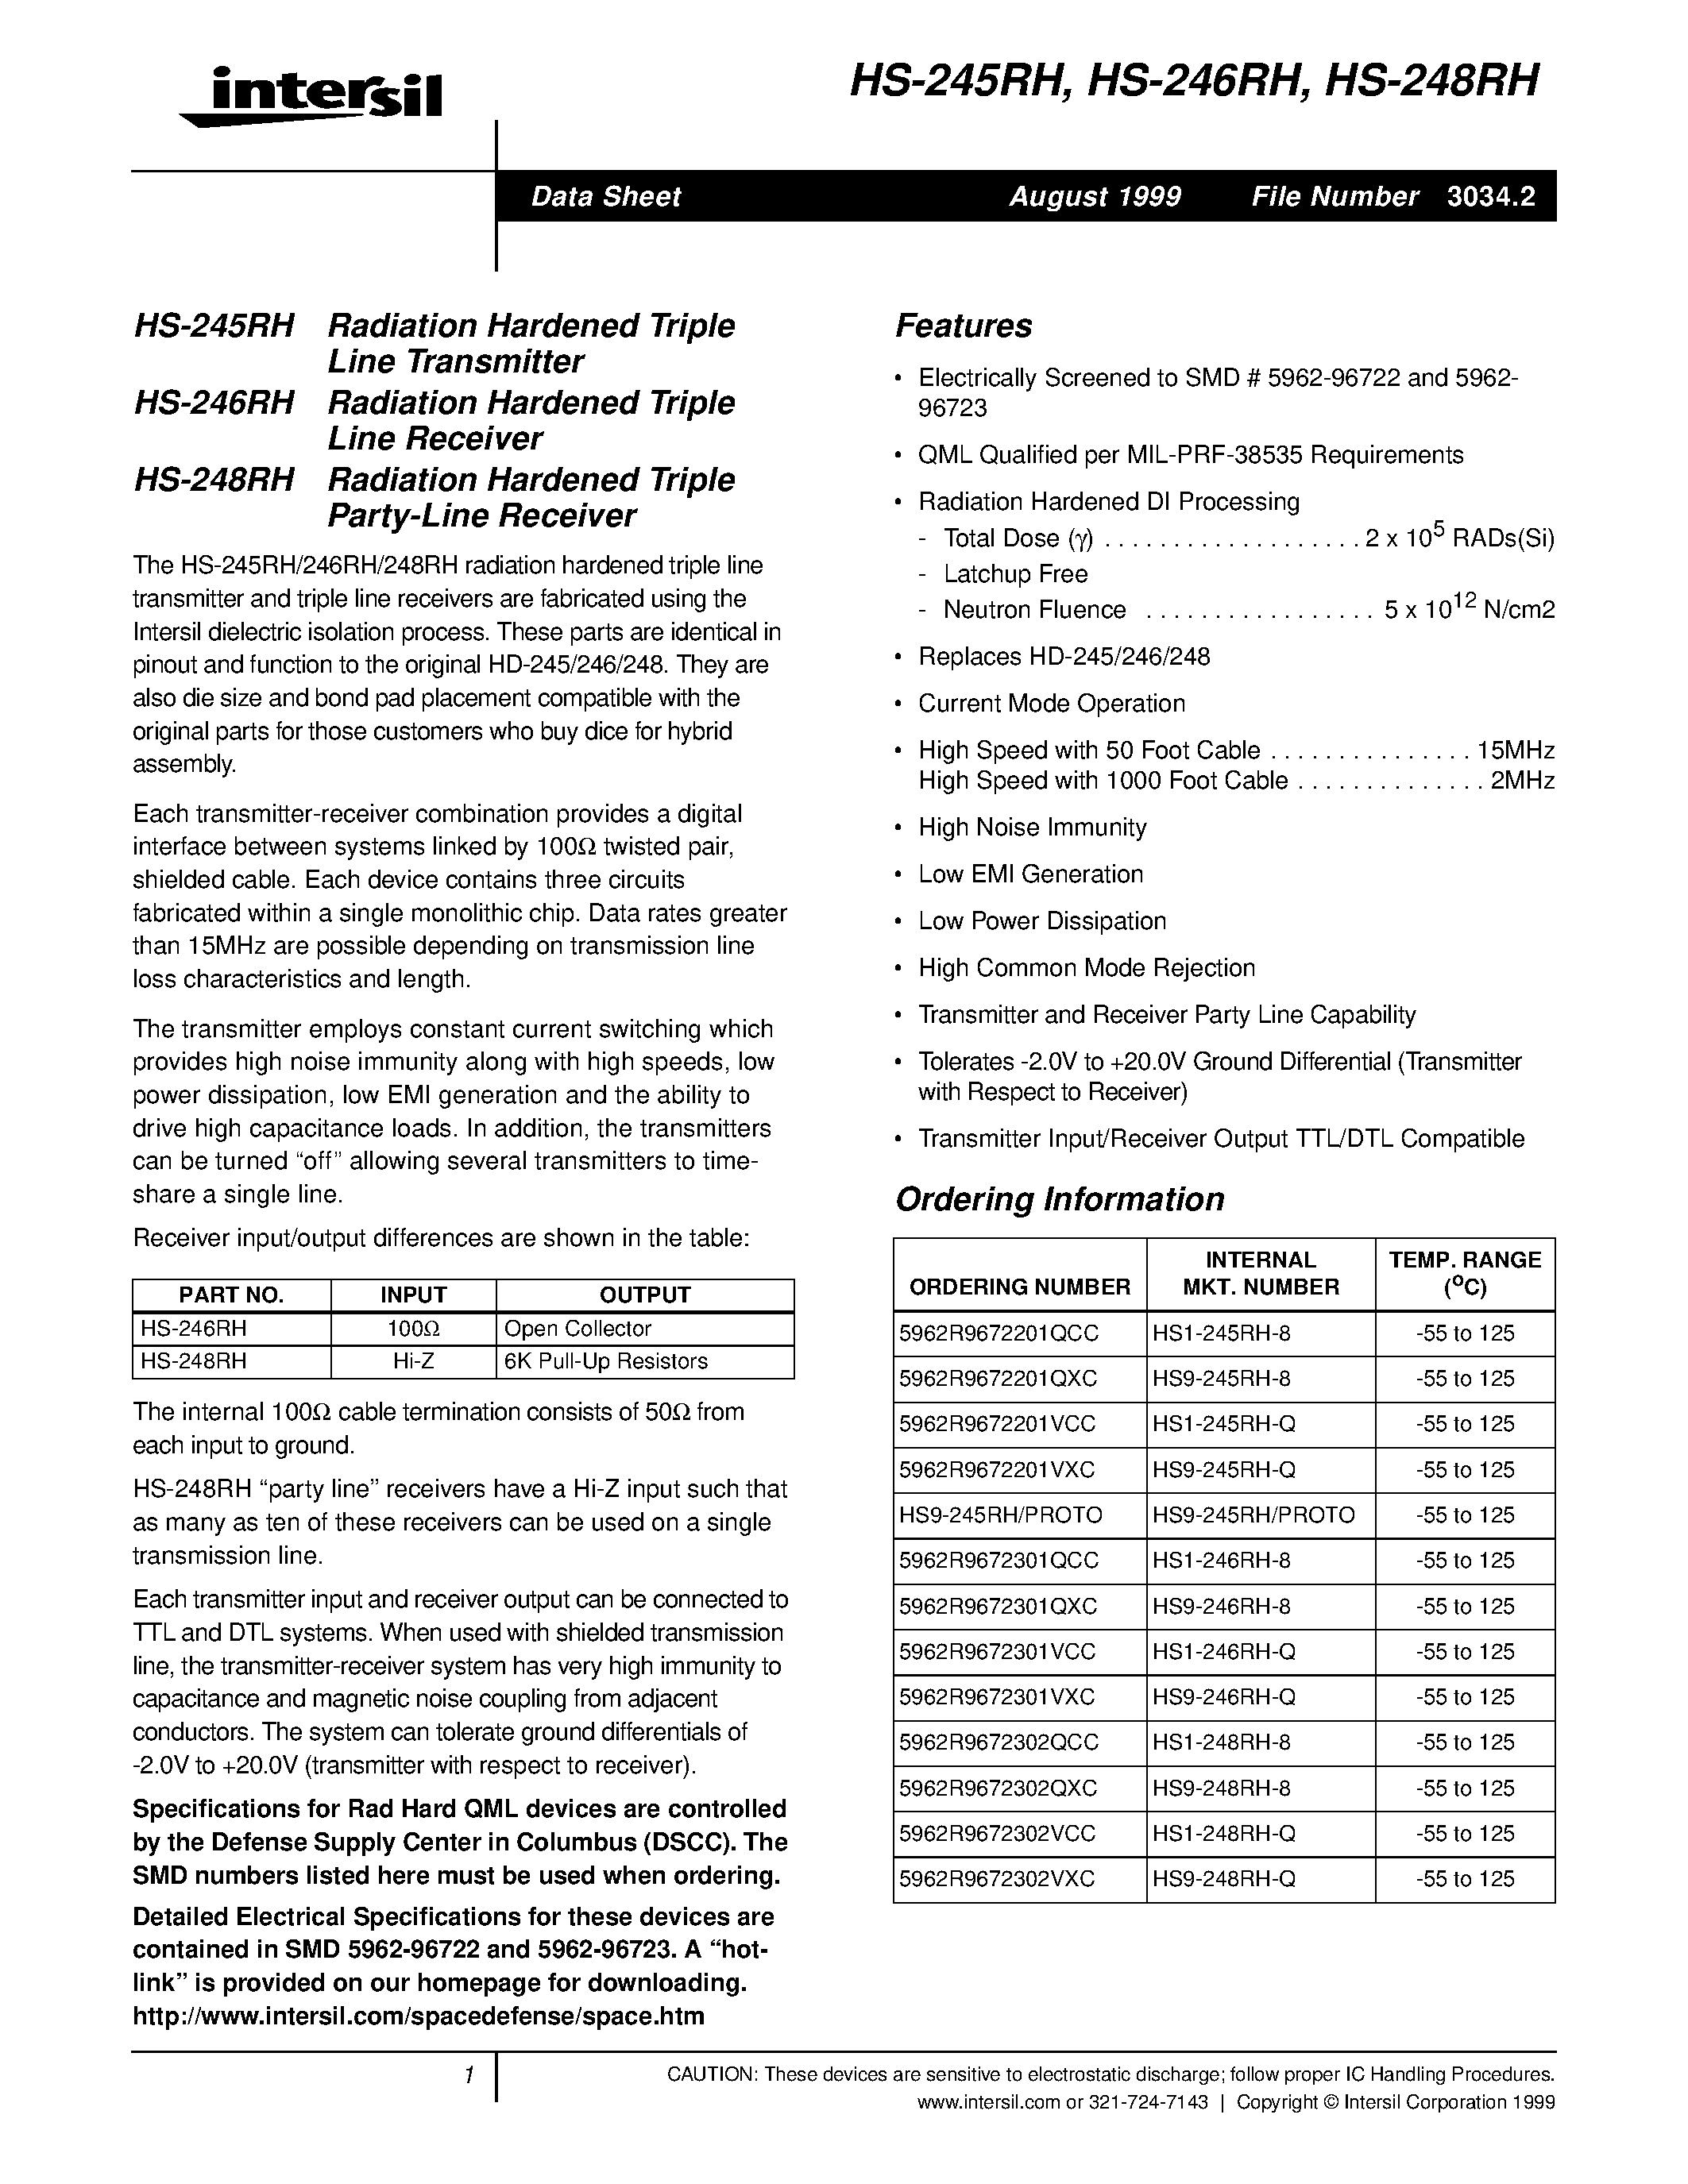 Даташит HS9-246RH-8 - Radiation Hardened Triple Line(party-Line) Transmitter страница 1